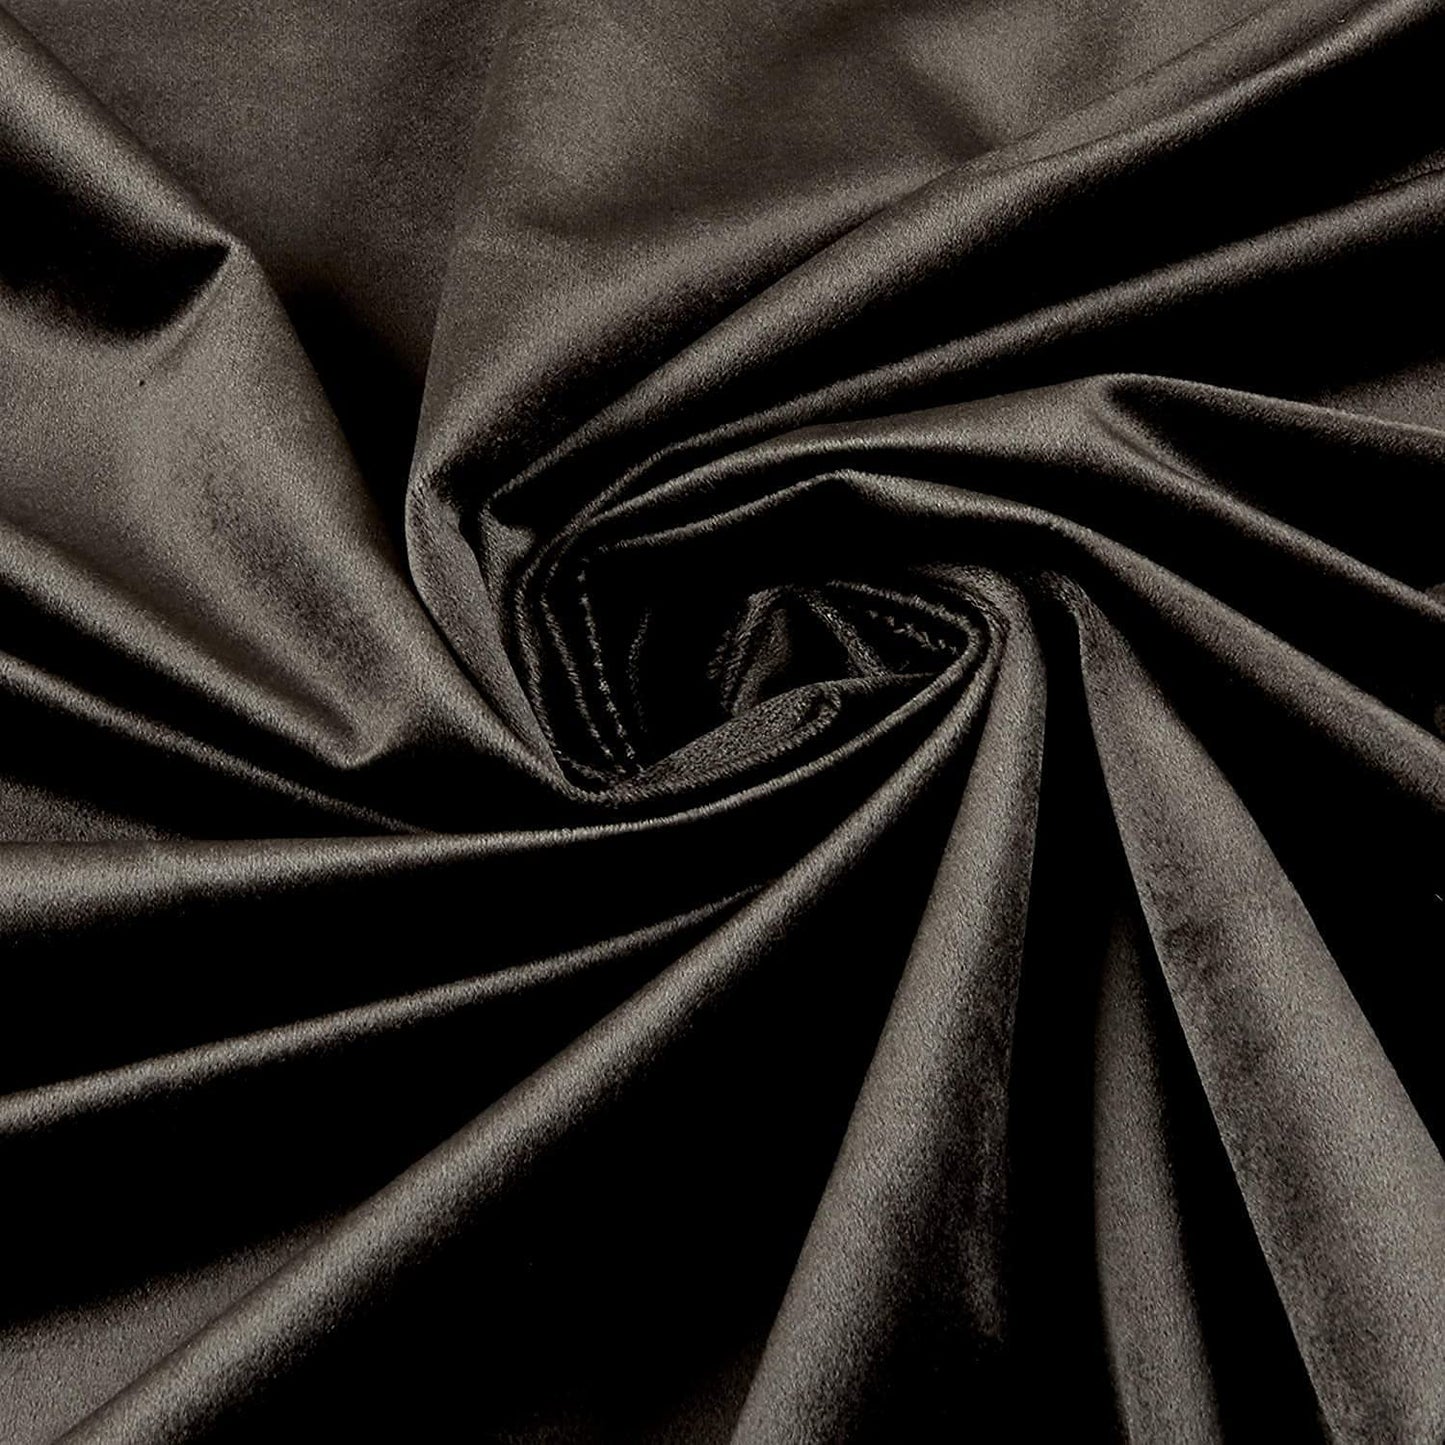 Upholstery Royal Velvet Fabric, 100% Polyester Upholstery Fabric (1 Yard, Charcoal)